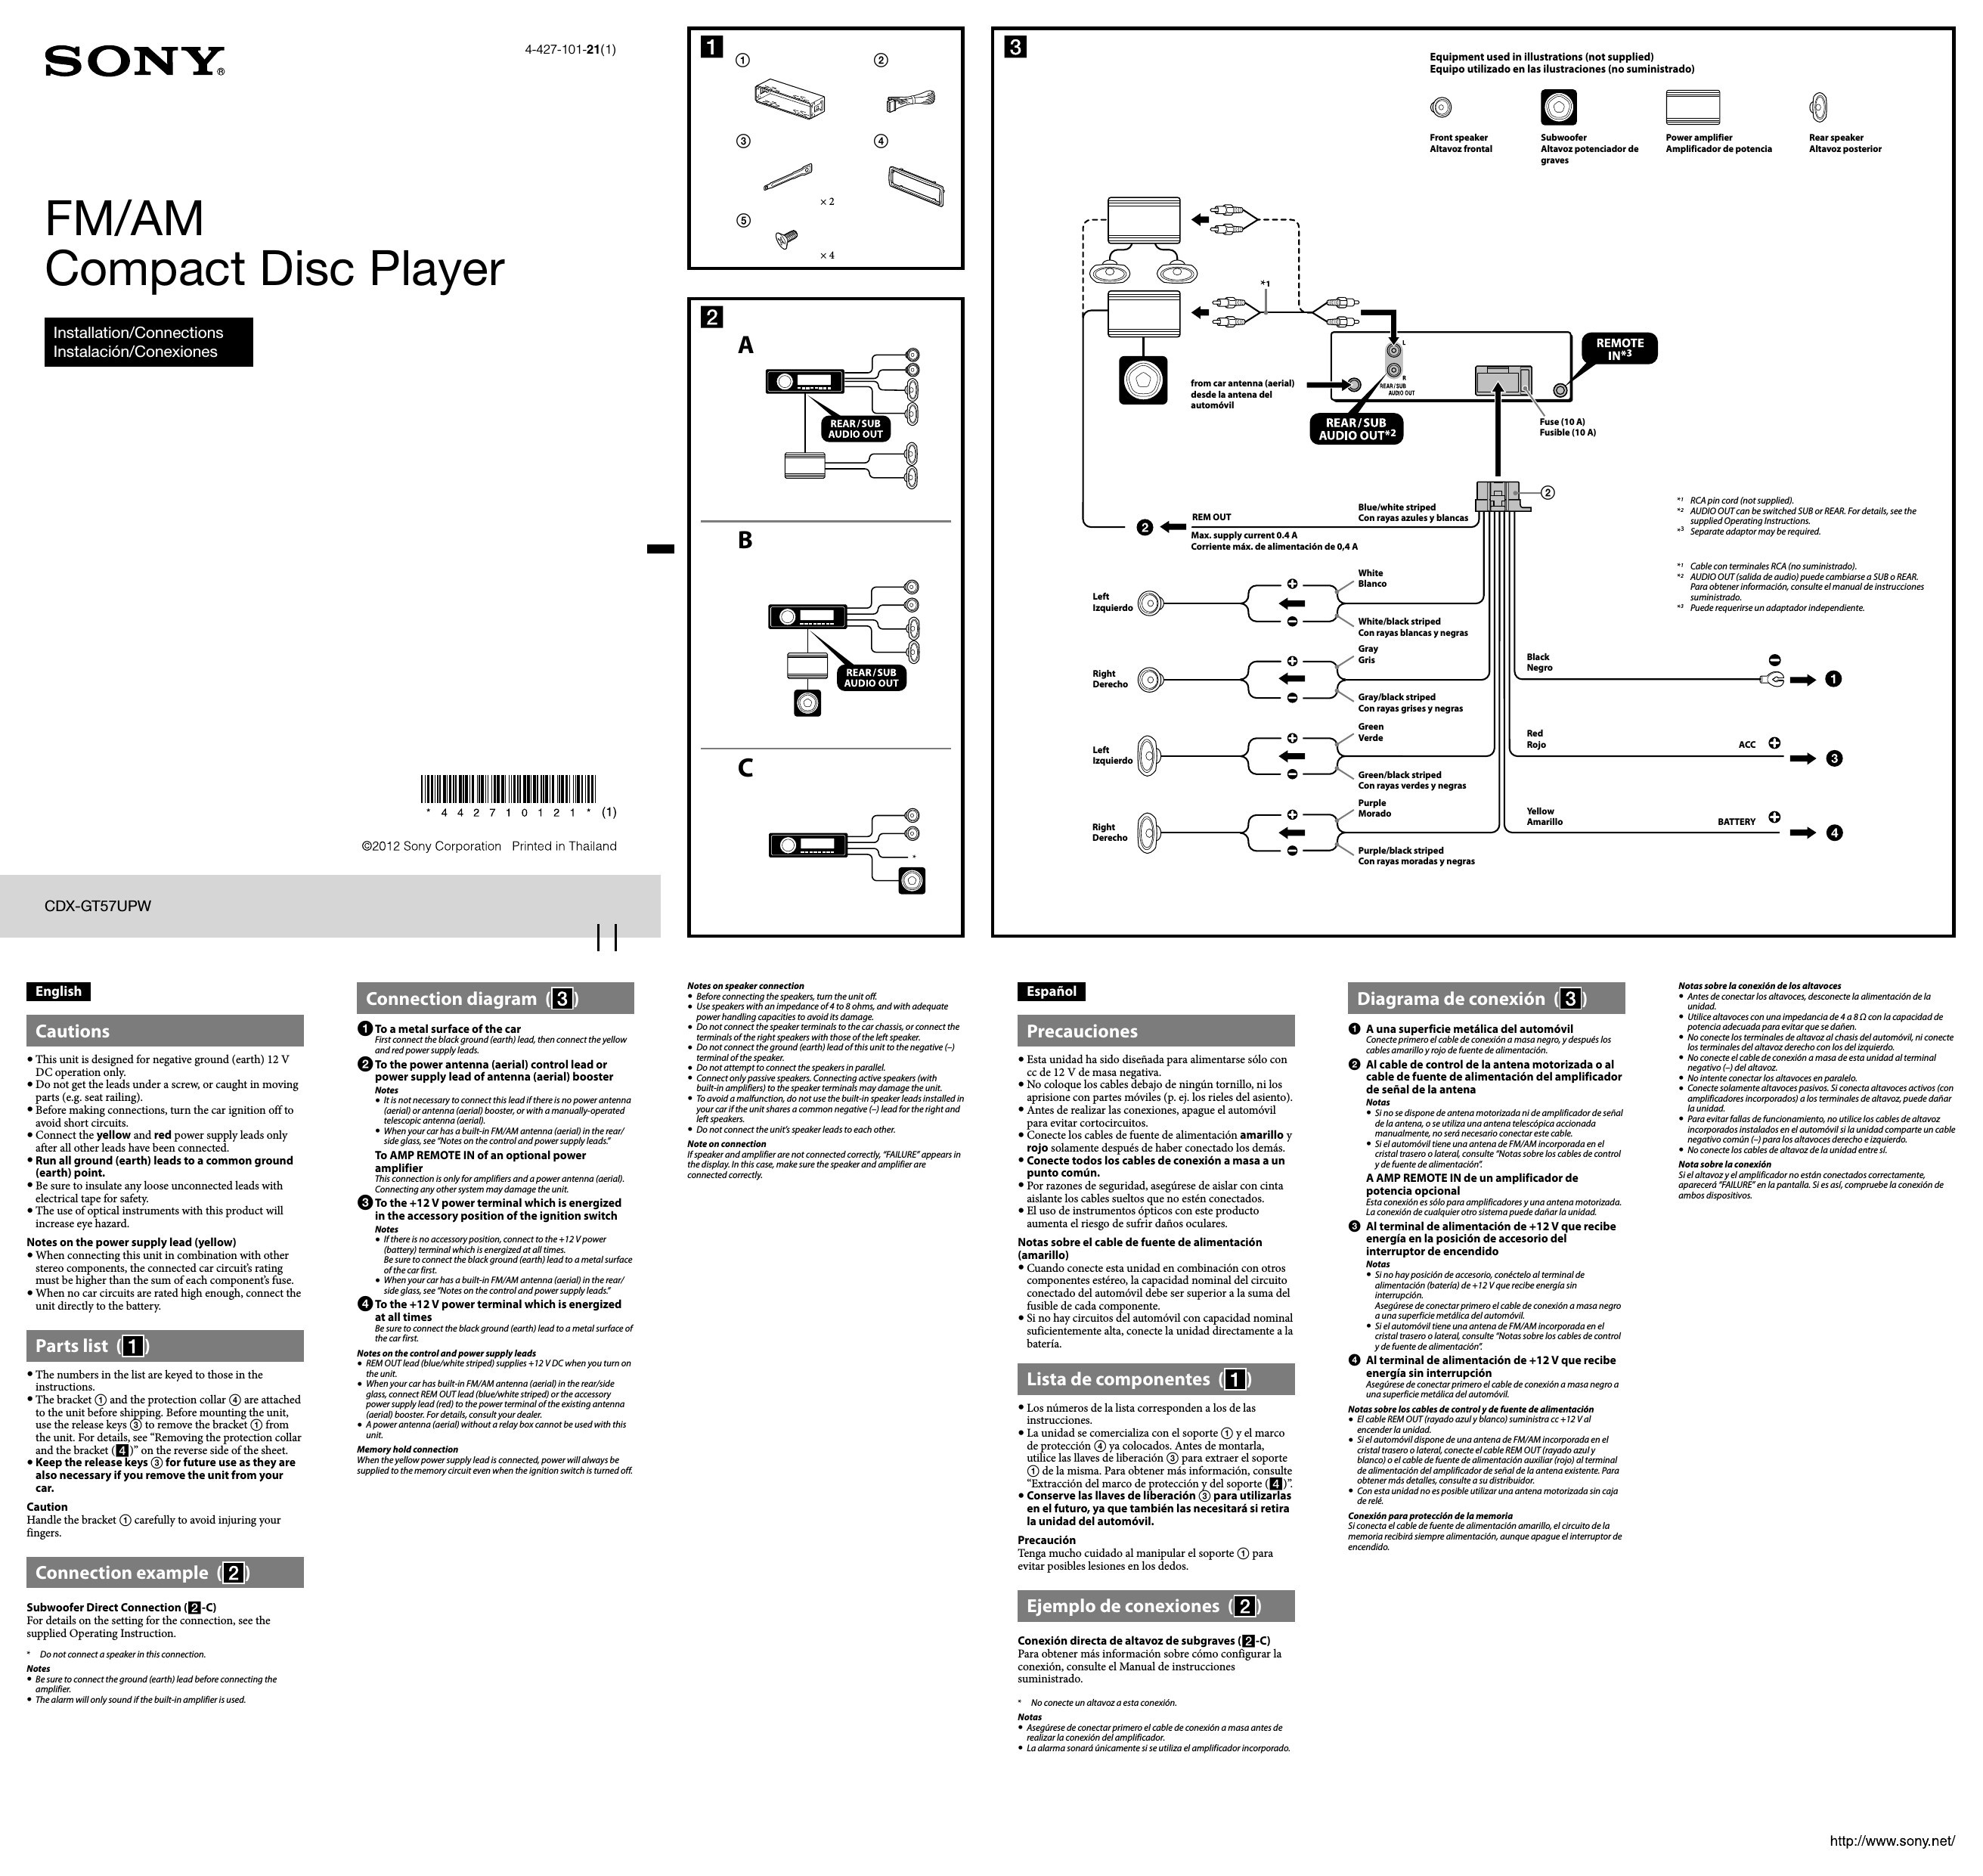 Mnl-4500] Installing Sony Car Stereo User Manual | 2019 Ebook Library - Sony Xplod Car Stereo Wiring Diagram